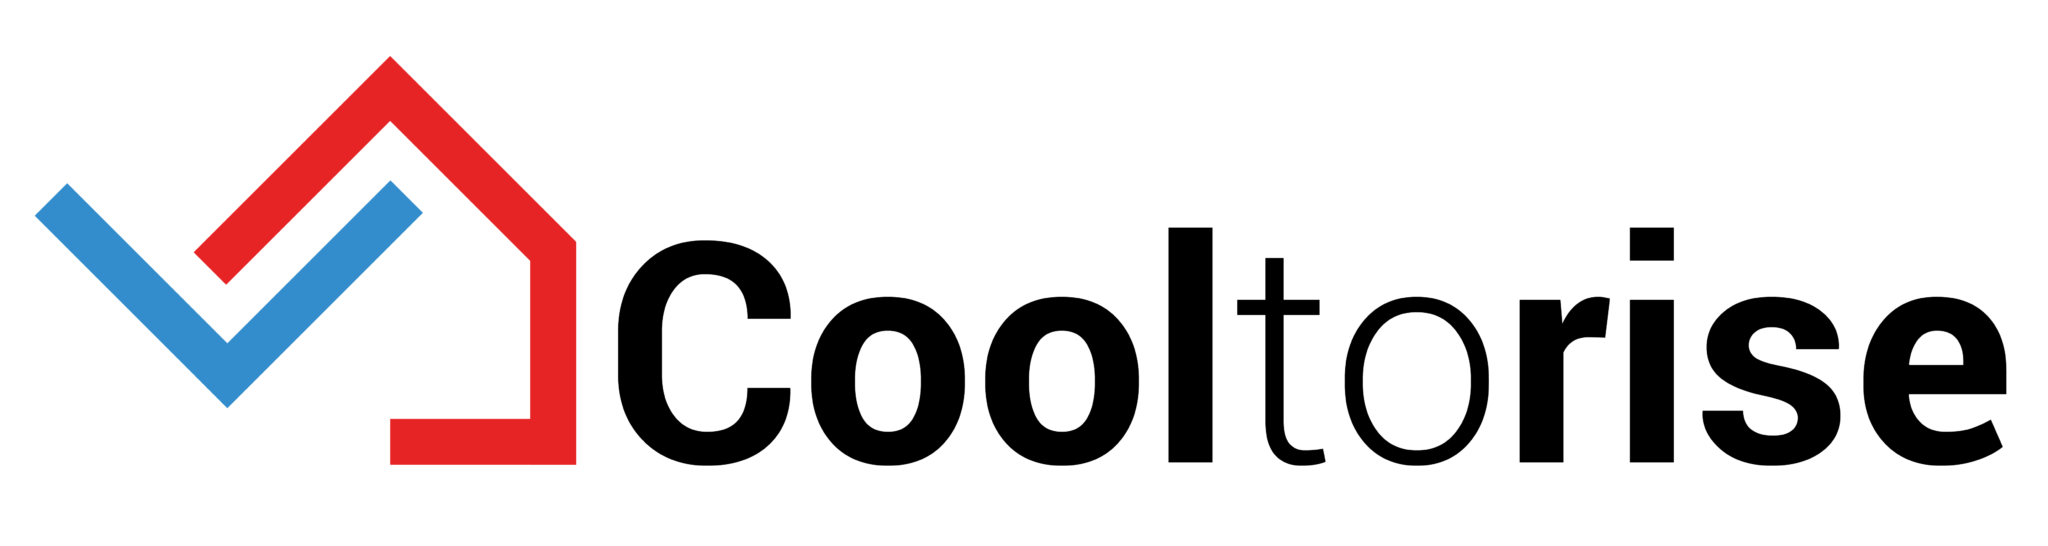 cooltorise